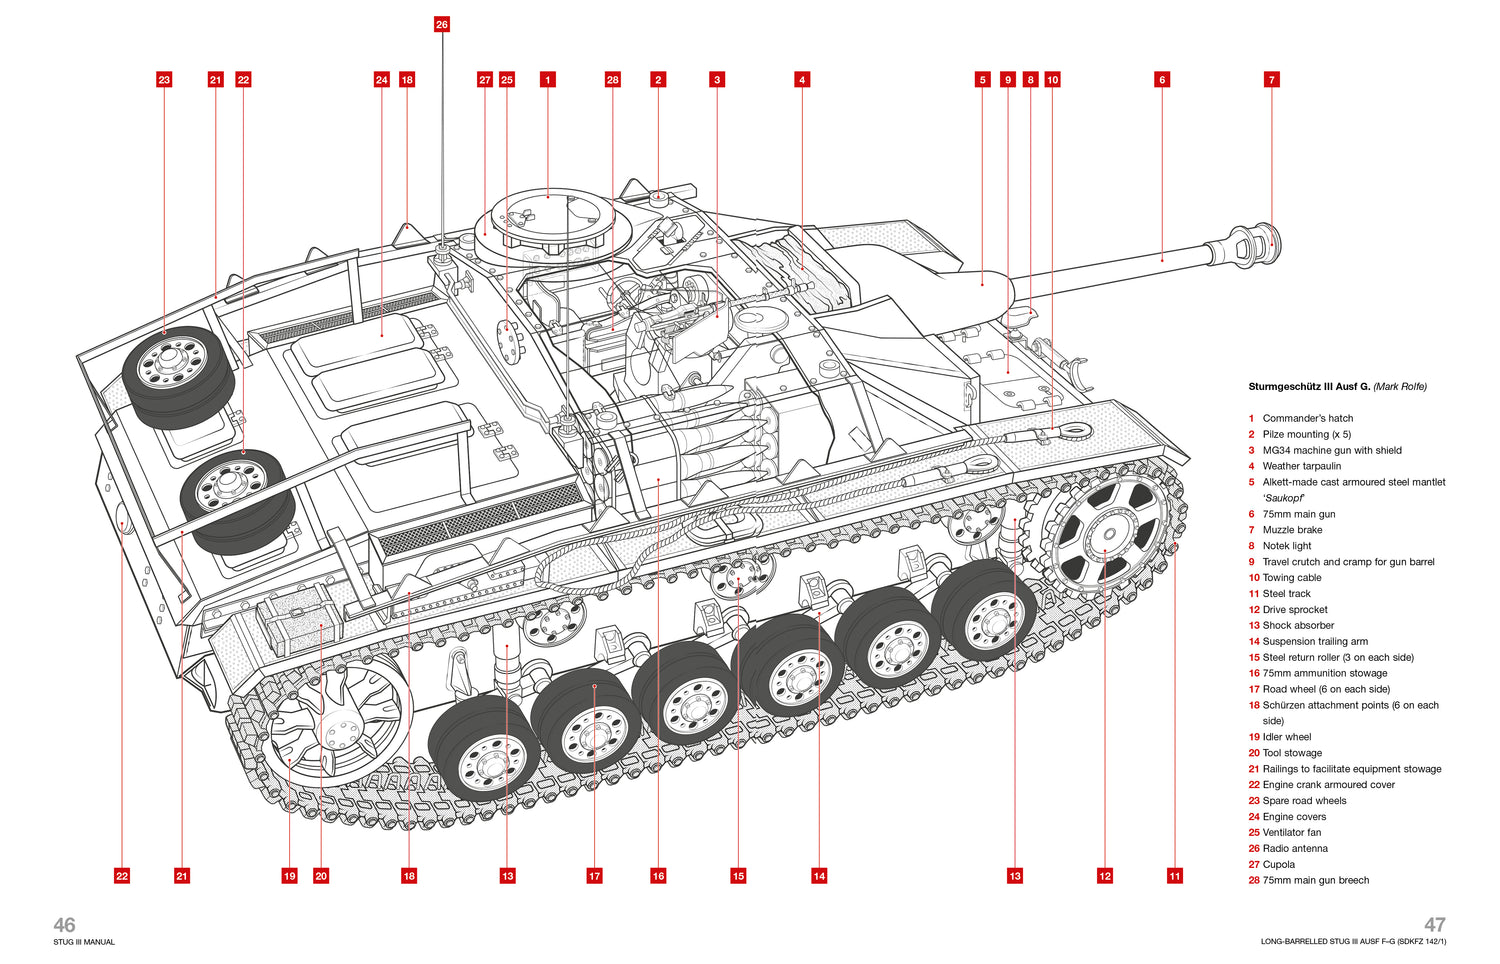 Stug III Haynes Manual – The Tank Museum